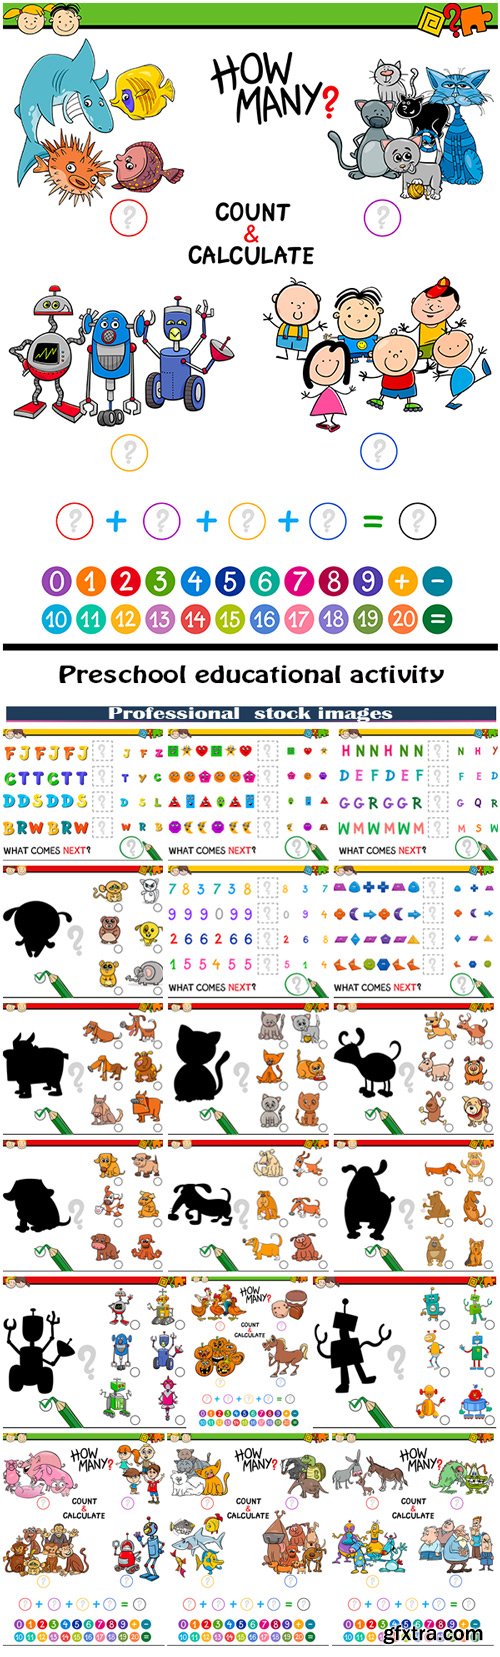 Preschool educational activity